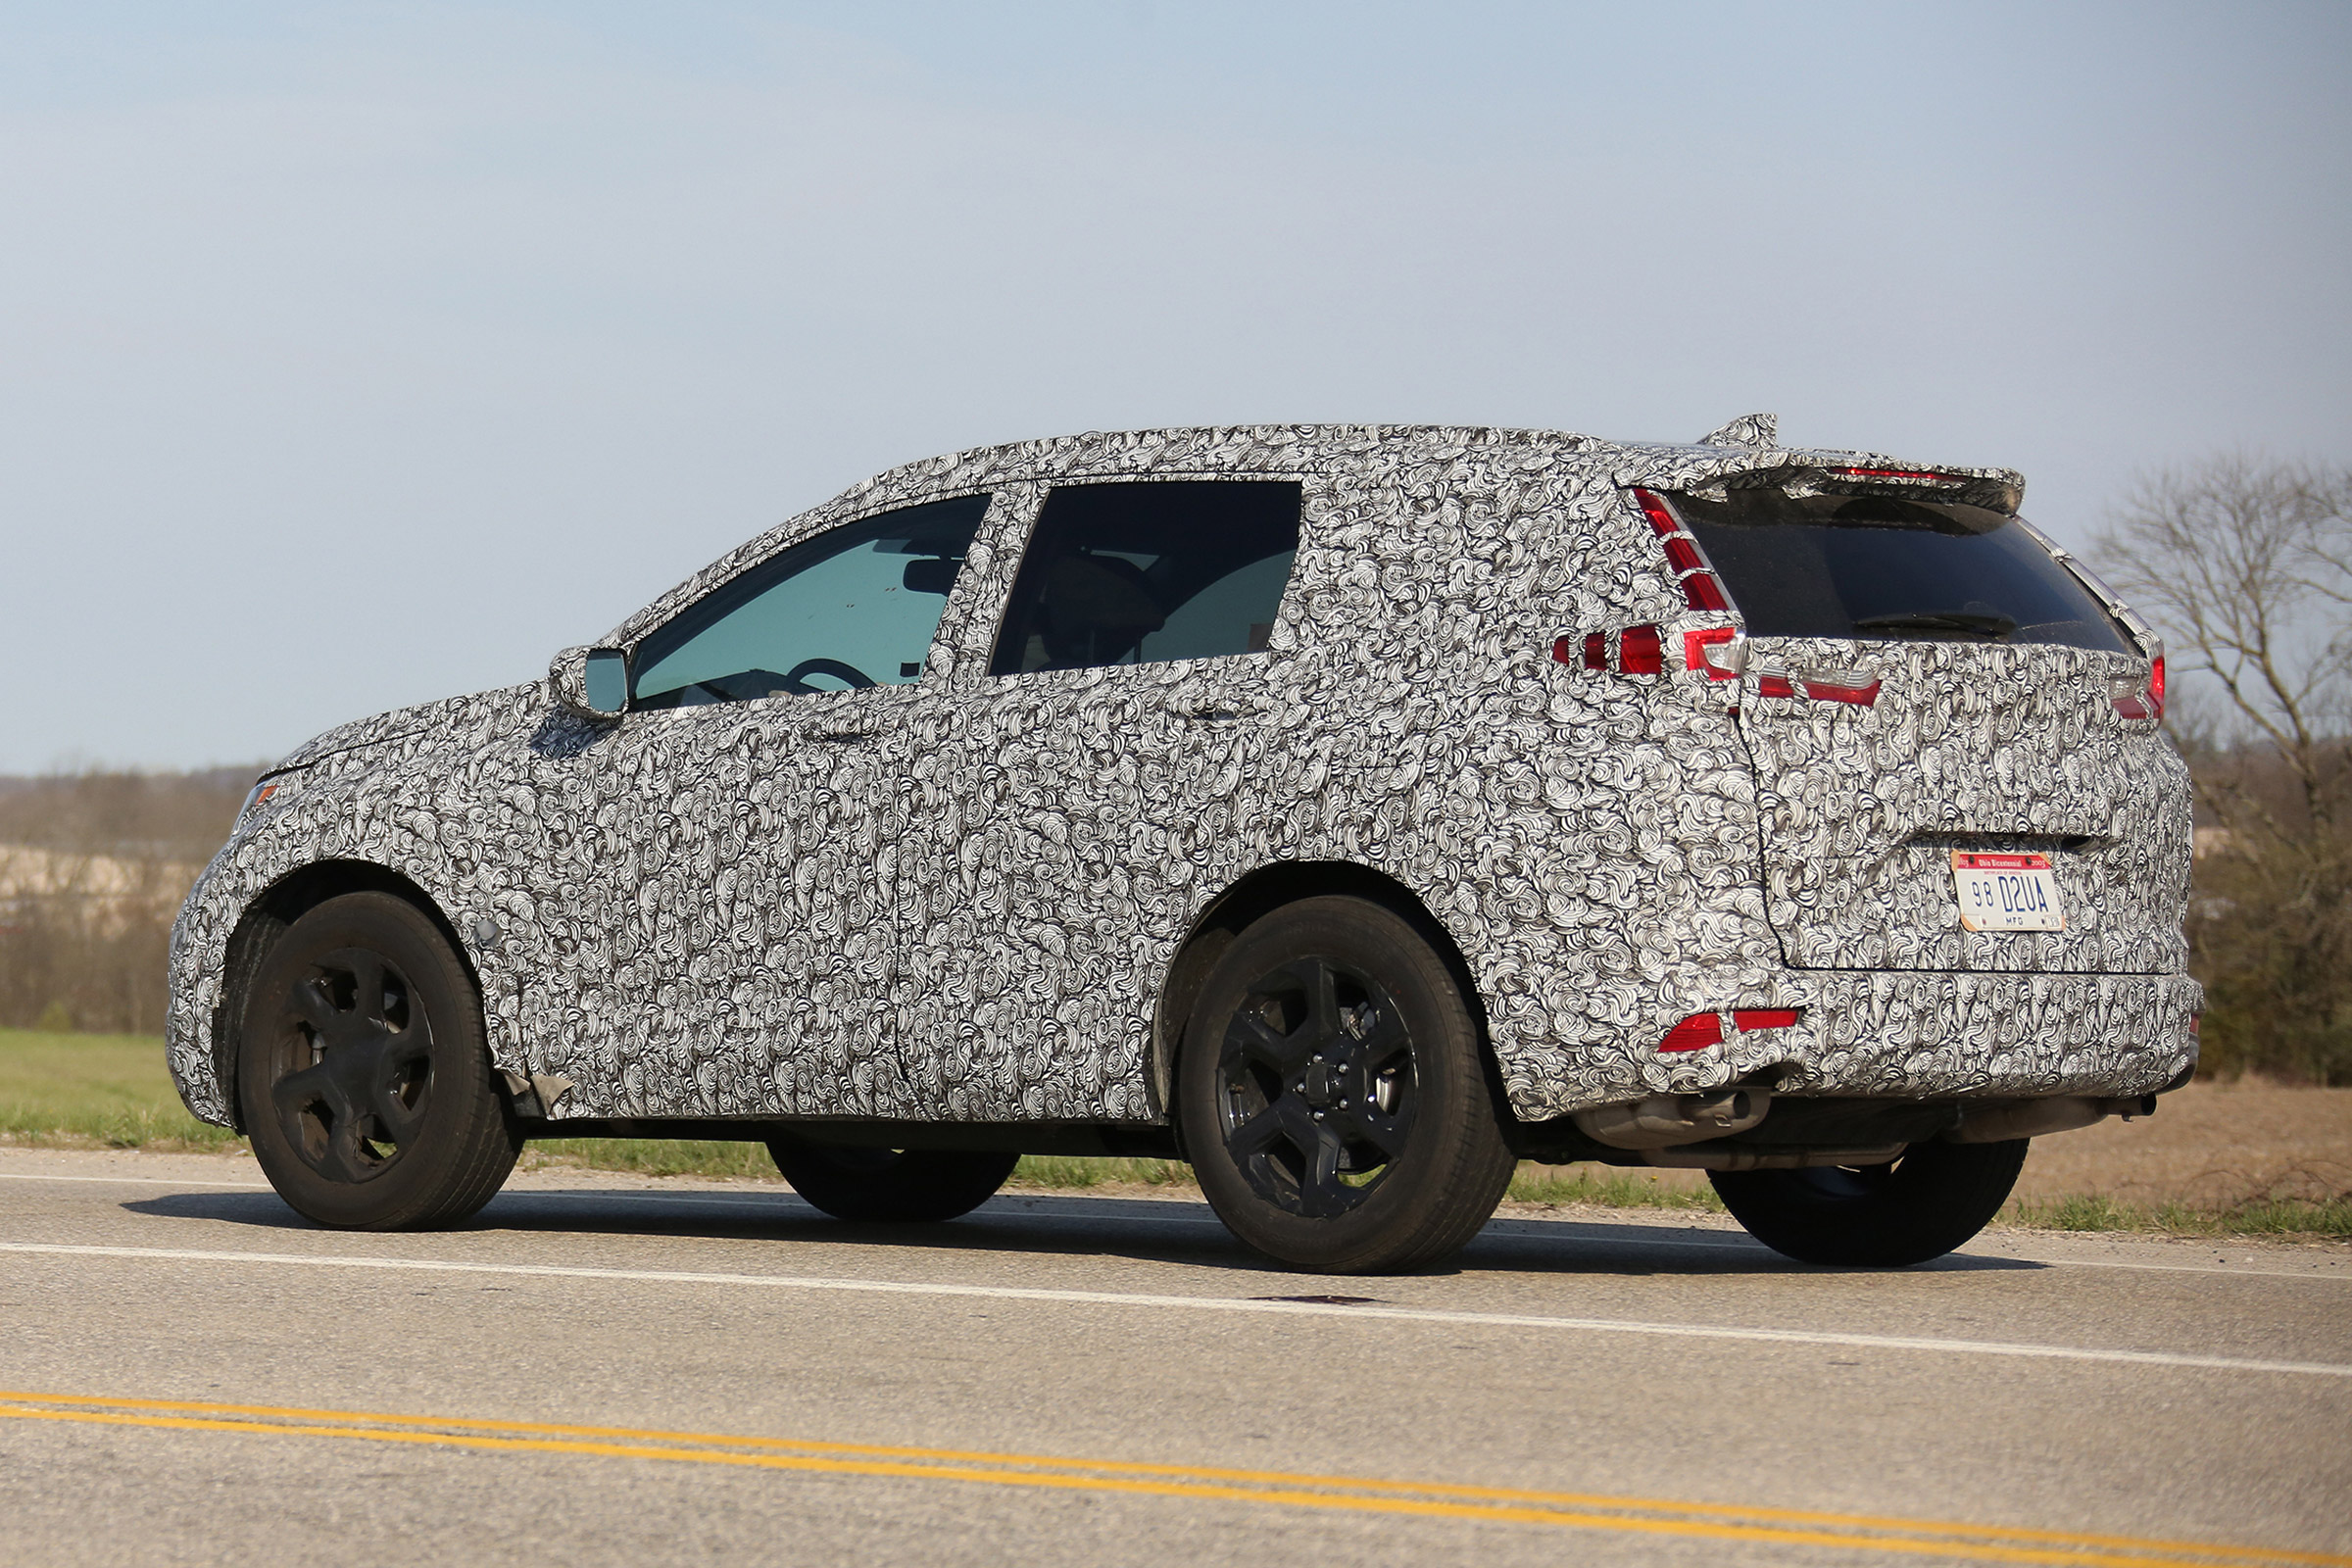 2017 Honda CR-V Rear Side Captured While Testing